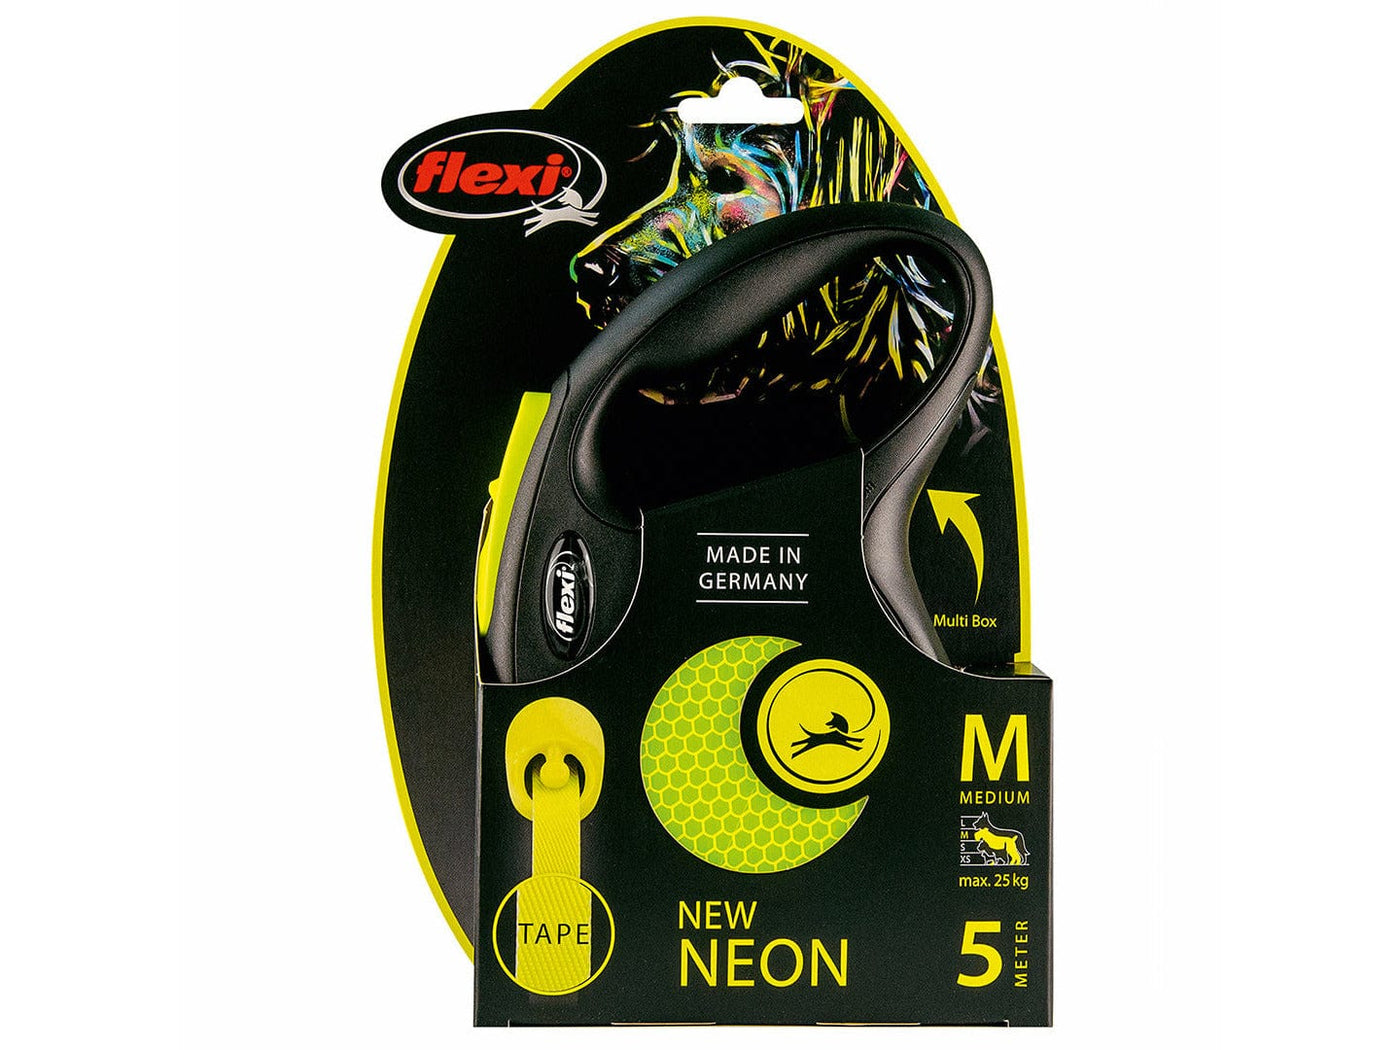 FLEXI NEW NEON TAPE M/5M black/neon yellow